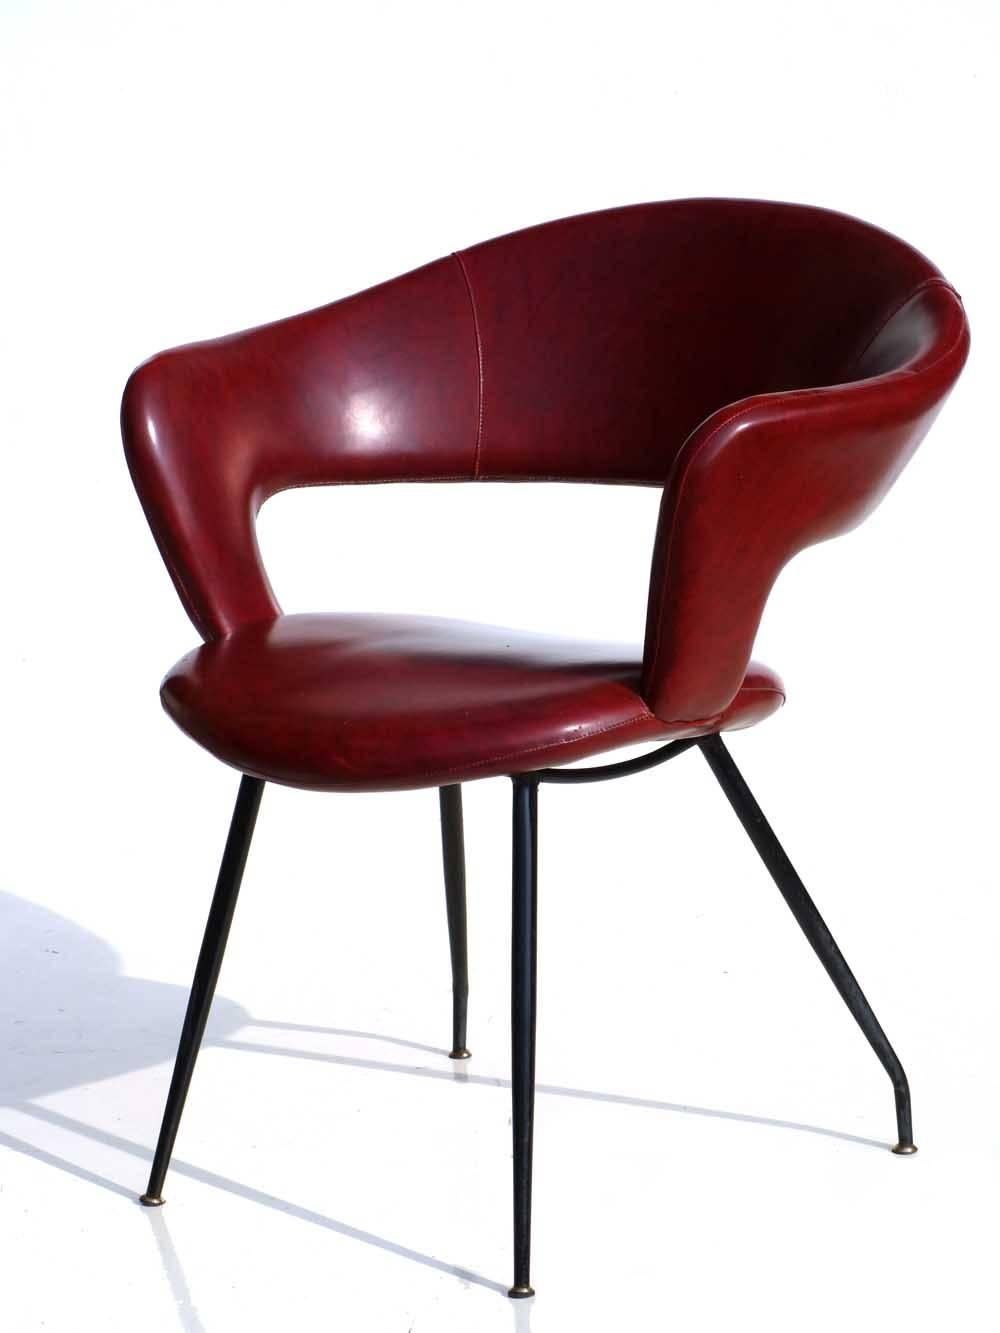 Mid-20th Century 1950s Gastone Rinaldi by RIMA Italian Midcentury Design Chair